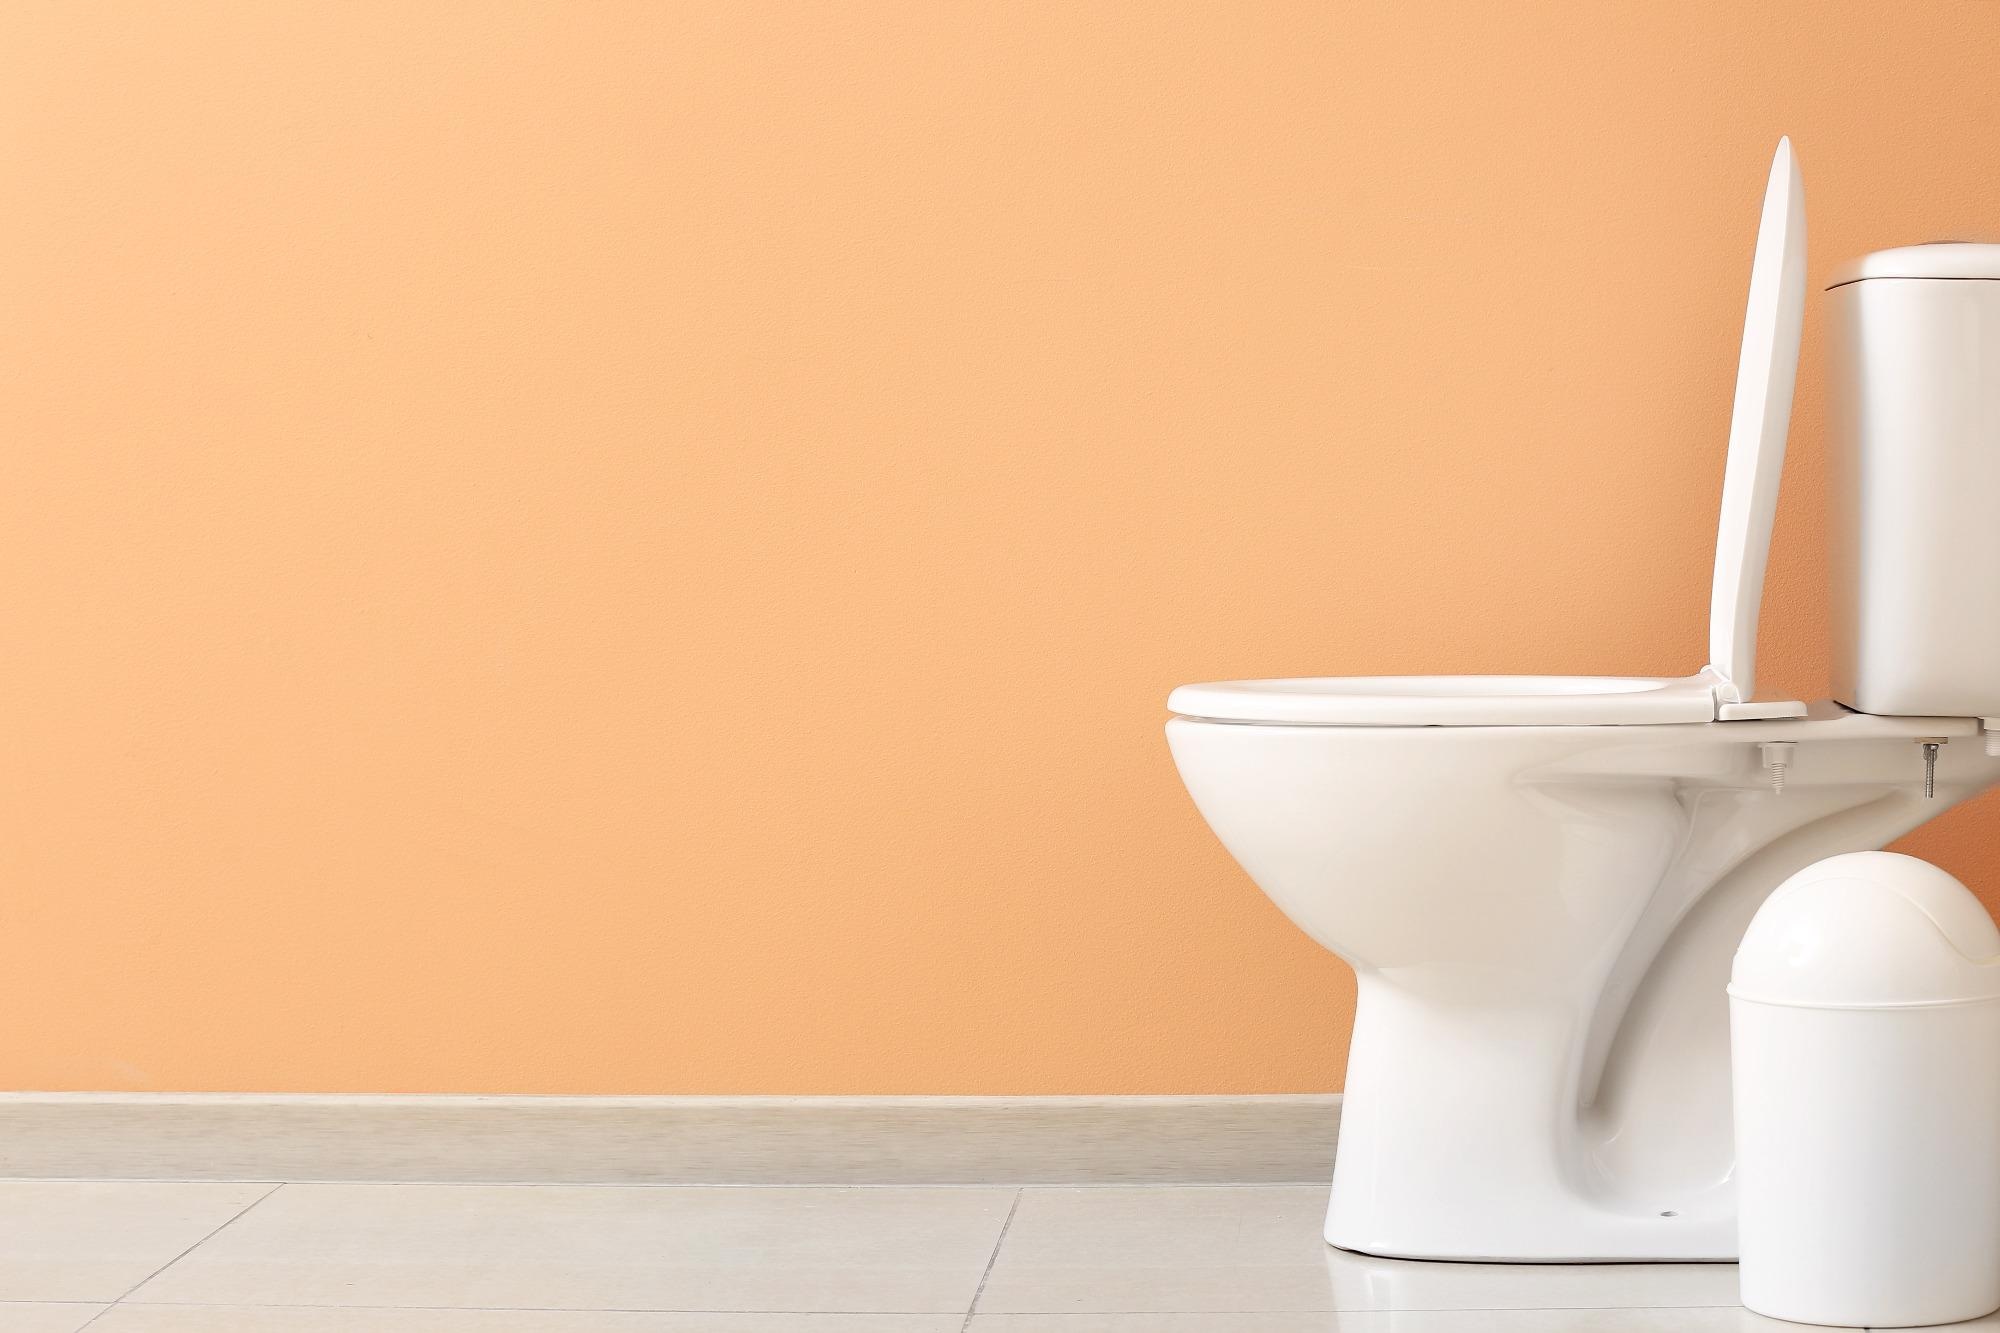 Study: Smart toilets for monitoring COVID-19 surges: passive diagnostics and public health. Image Credit: Pixel-Shot / Shutterstock